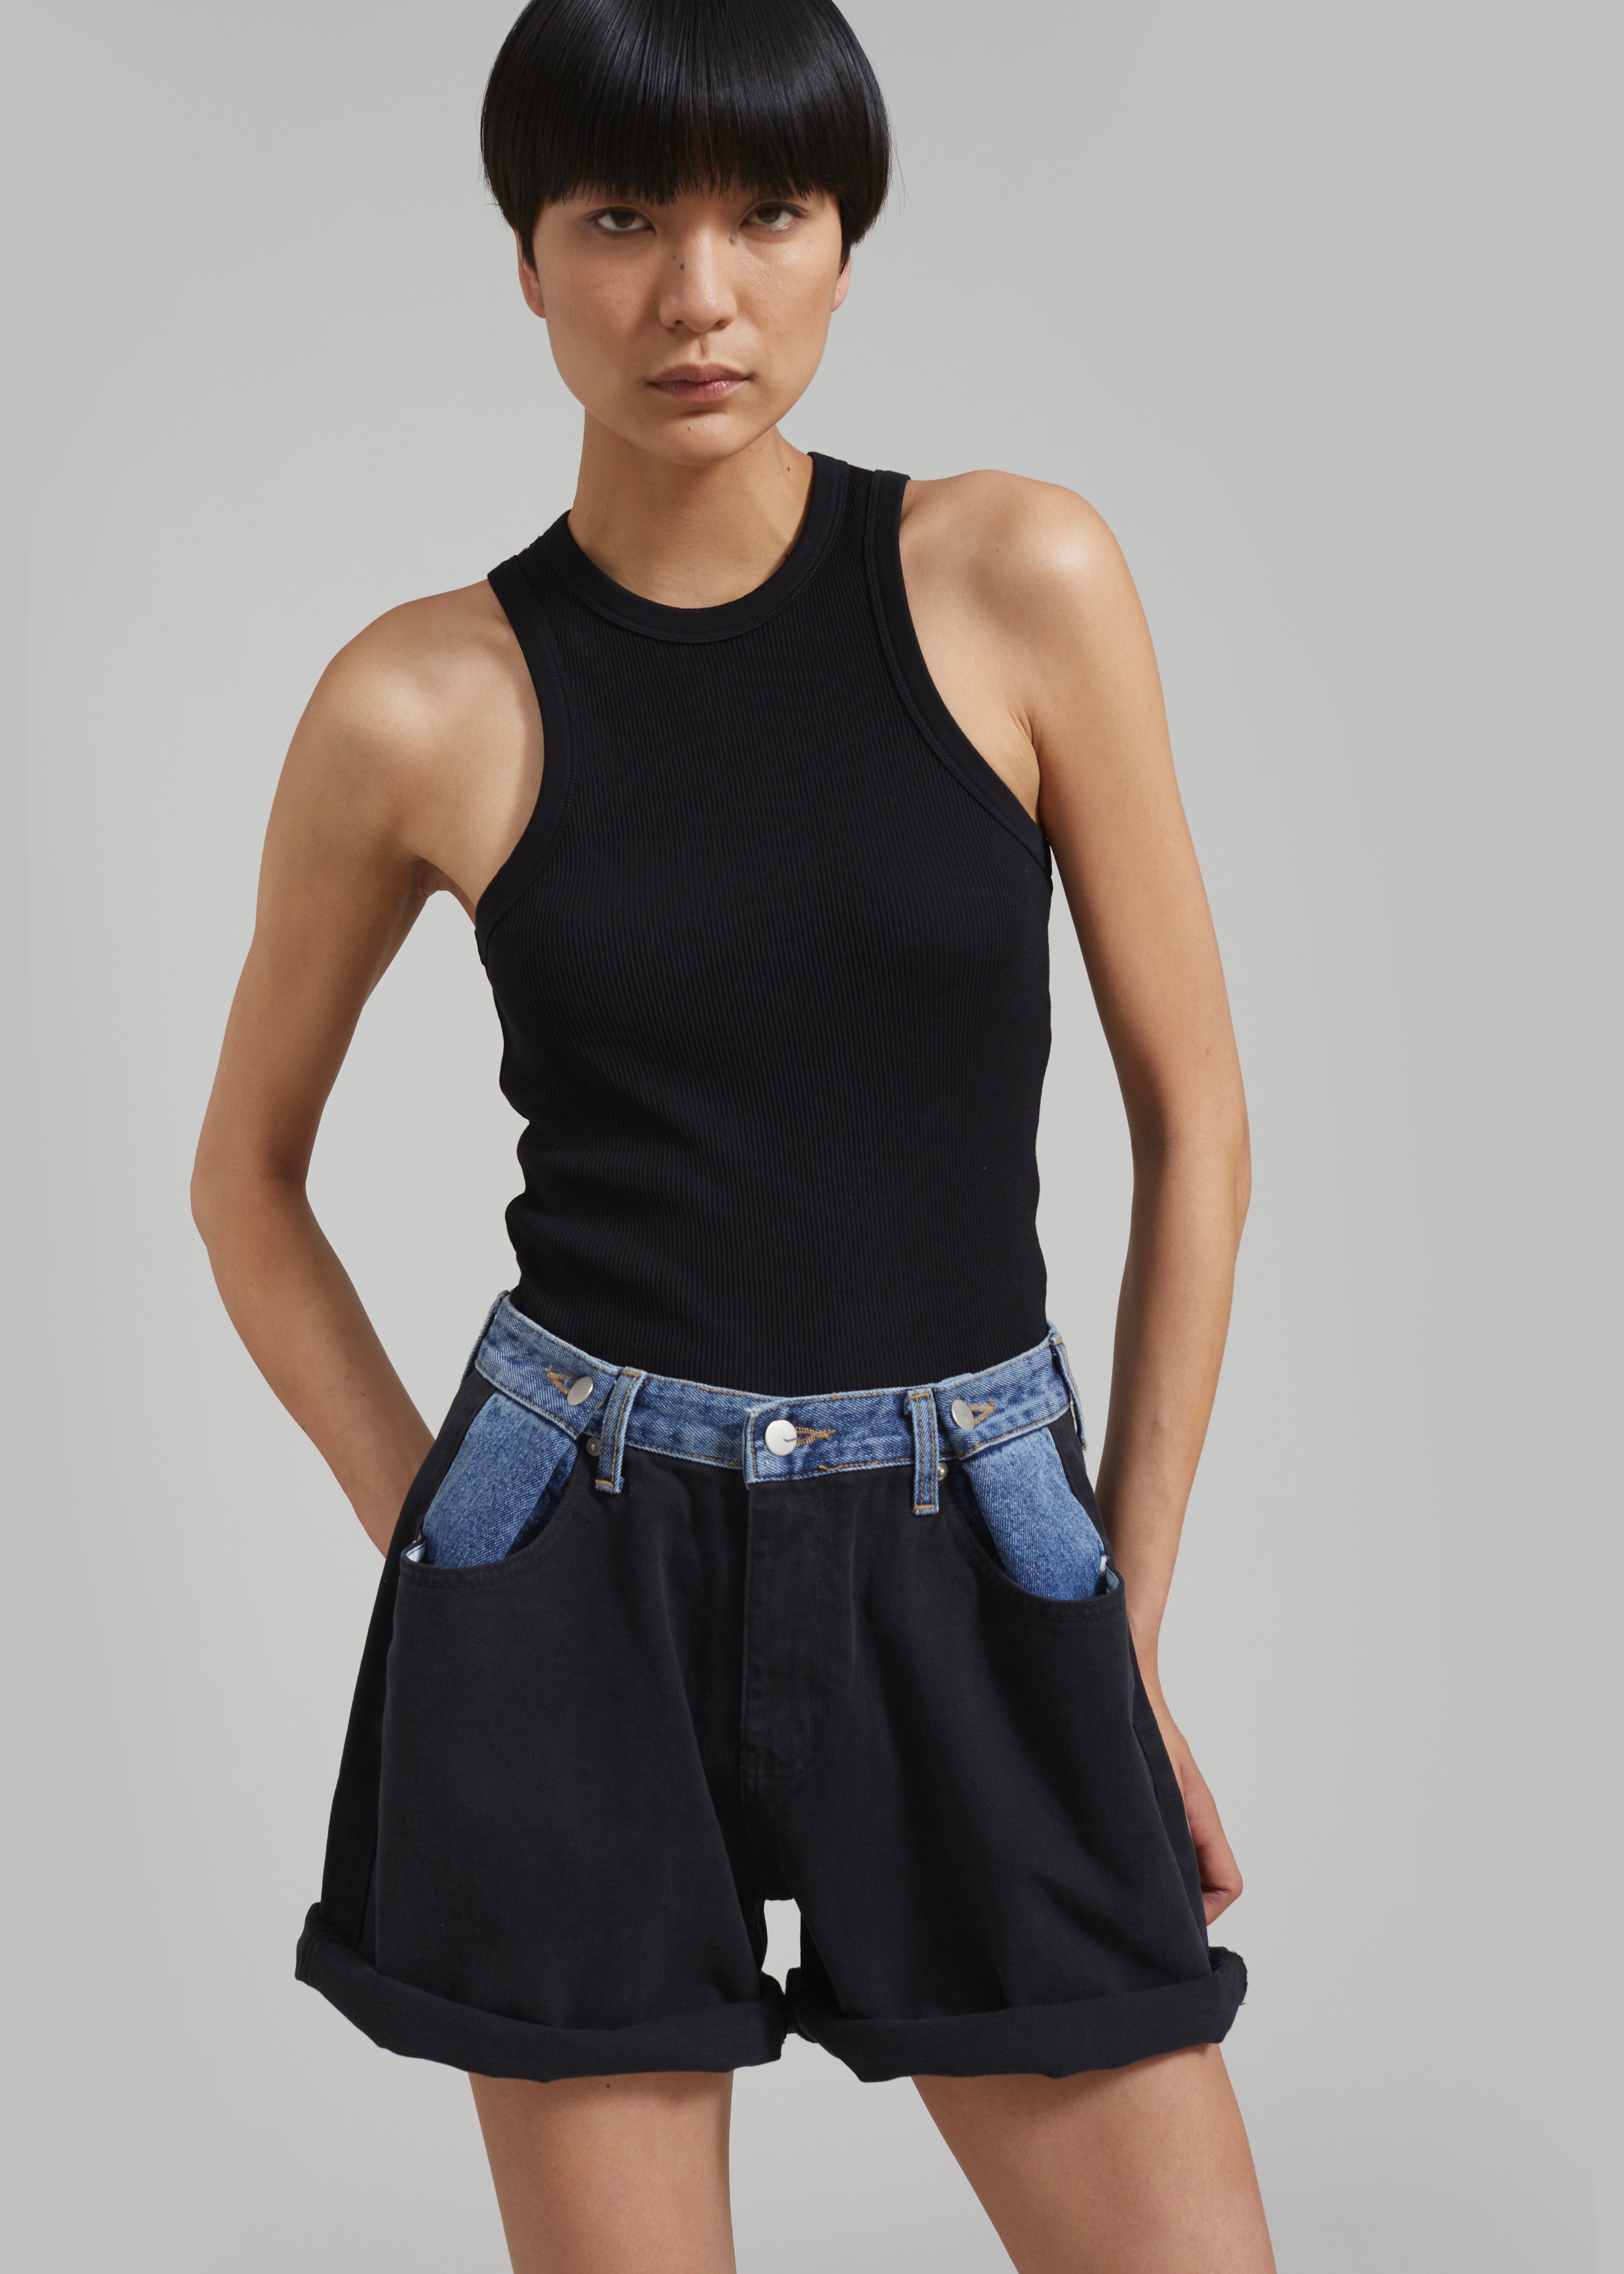 Hayla Contrast Denim Shorts - Black/Blue - 6